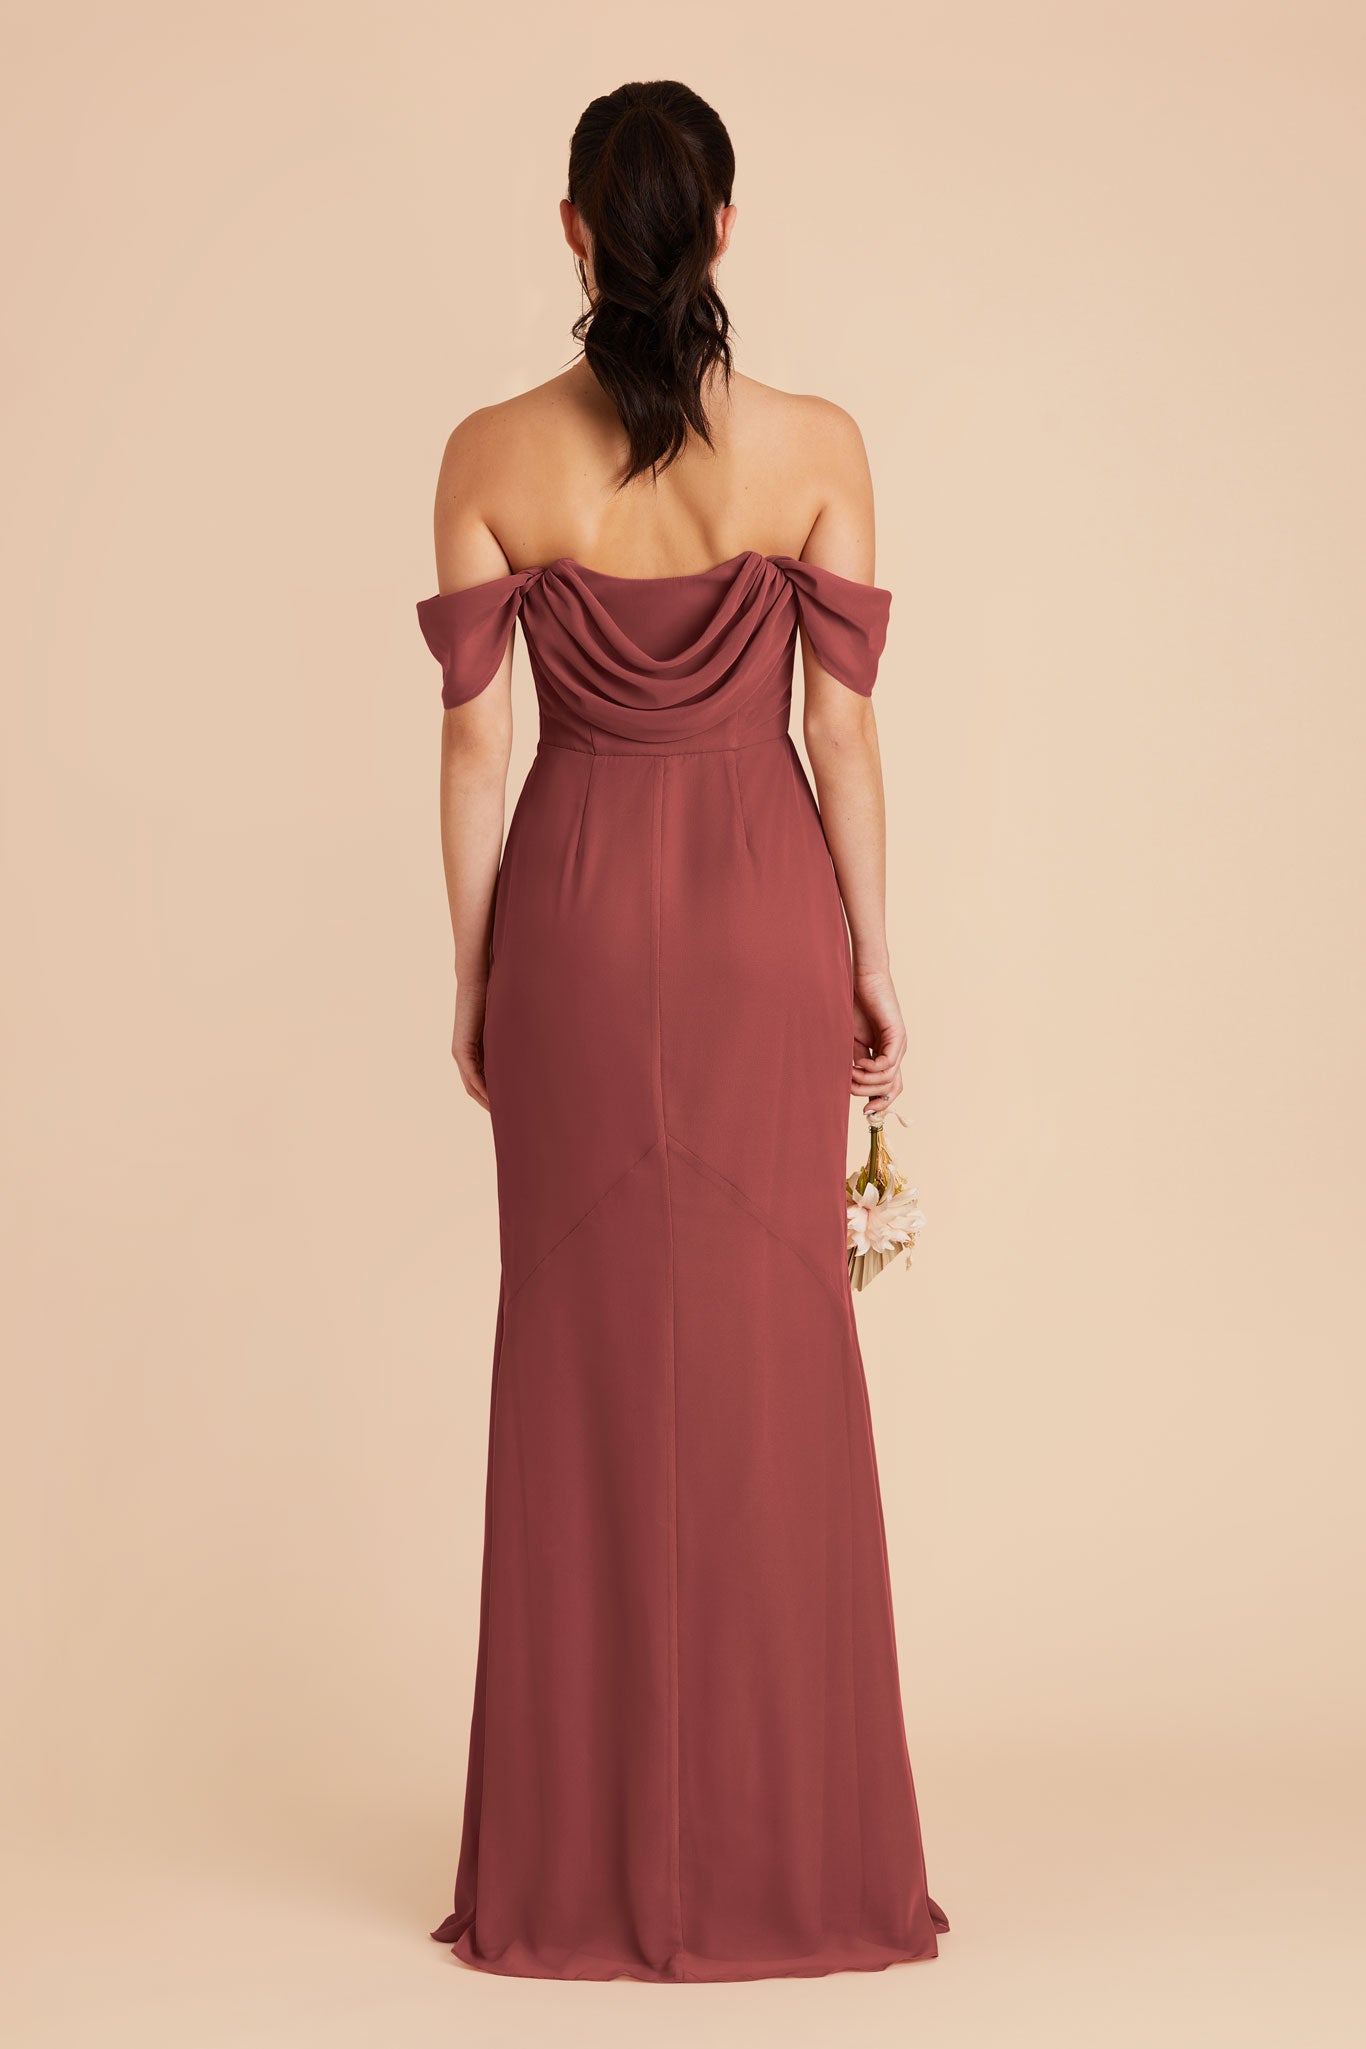 Rosewood Mira Convertible Dress by Birdy Grey